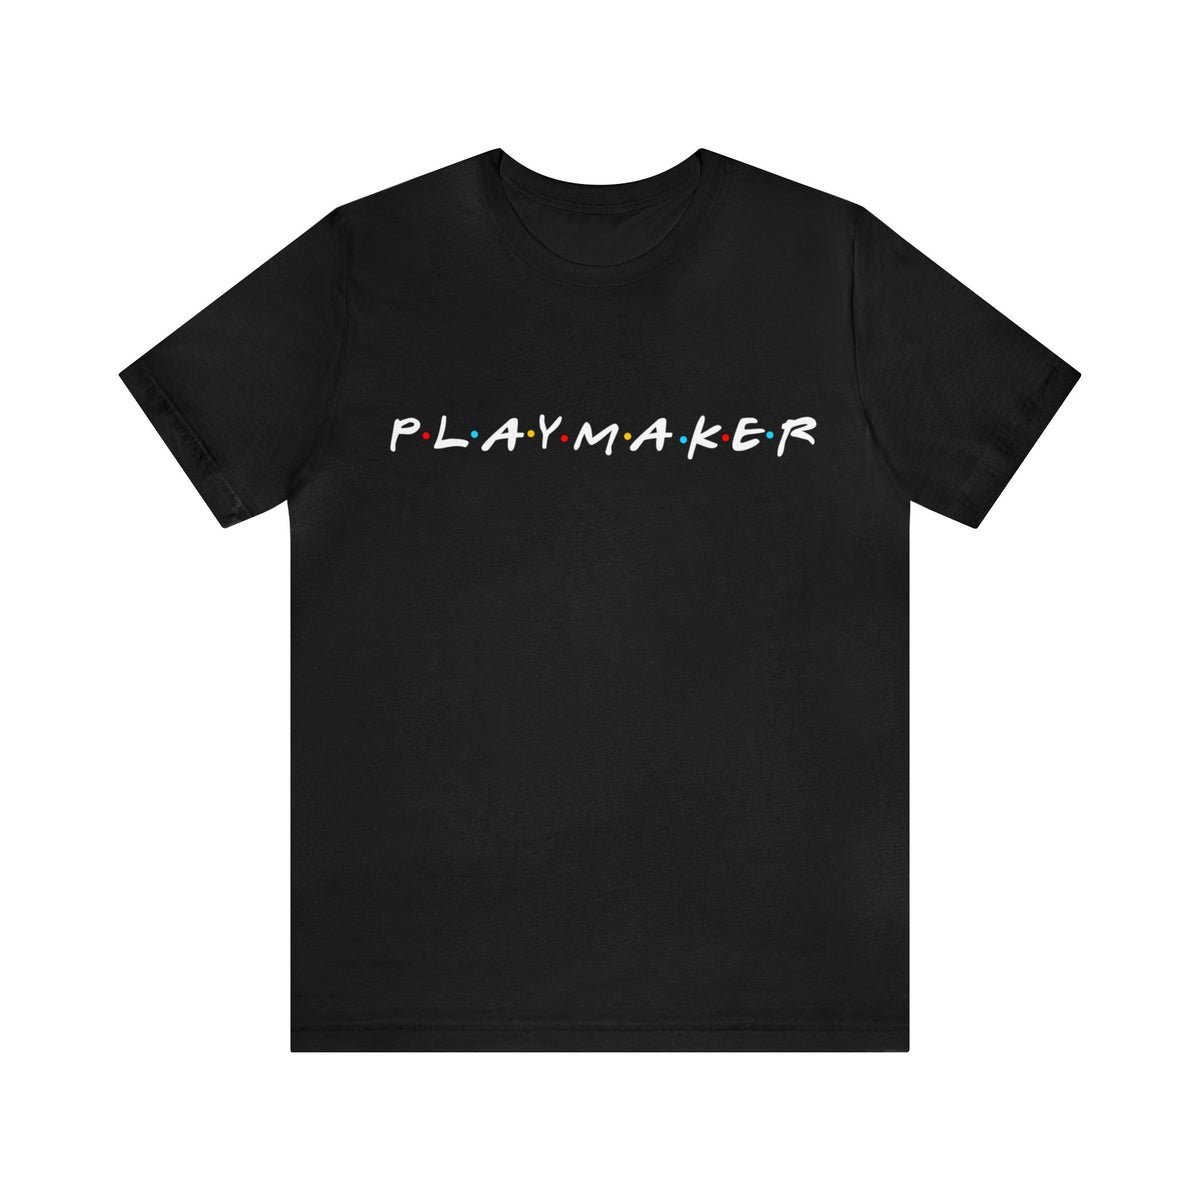 Playmaker "FRIENDS" Tee